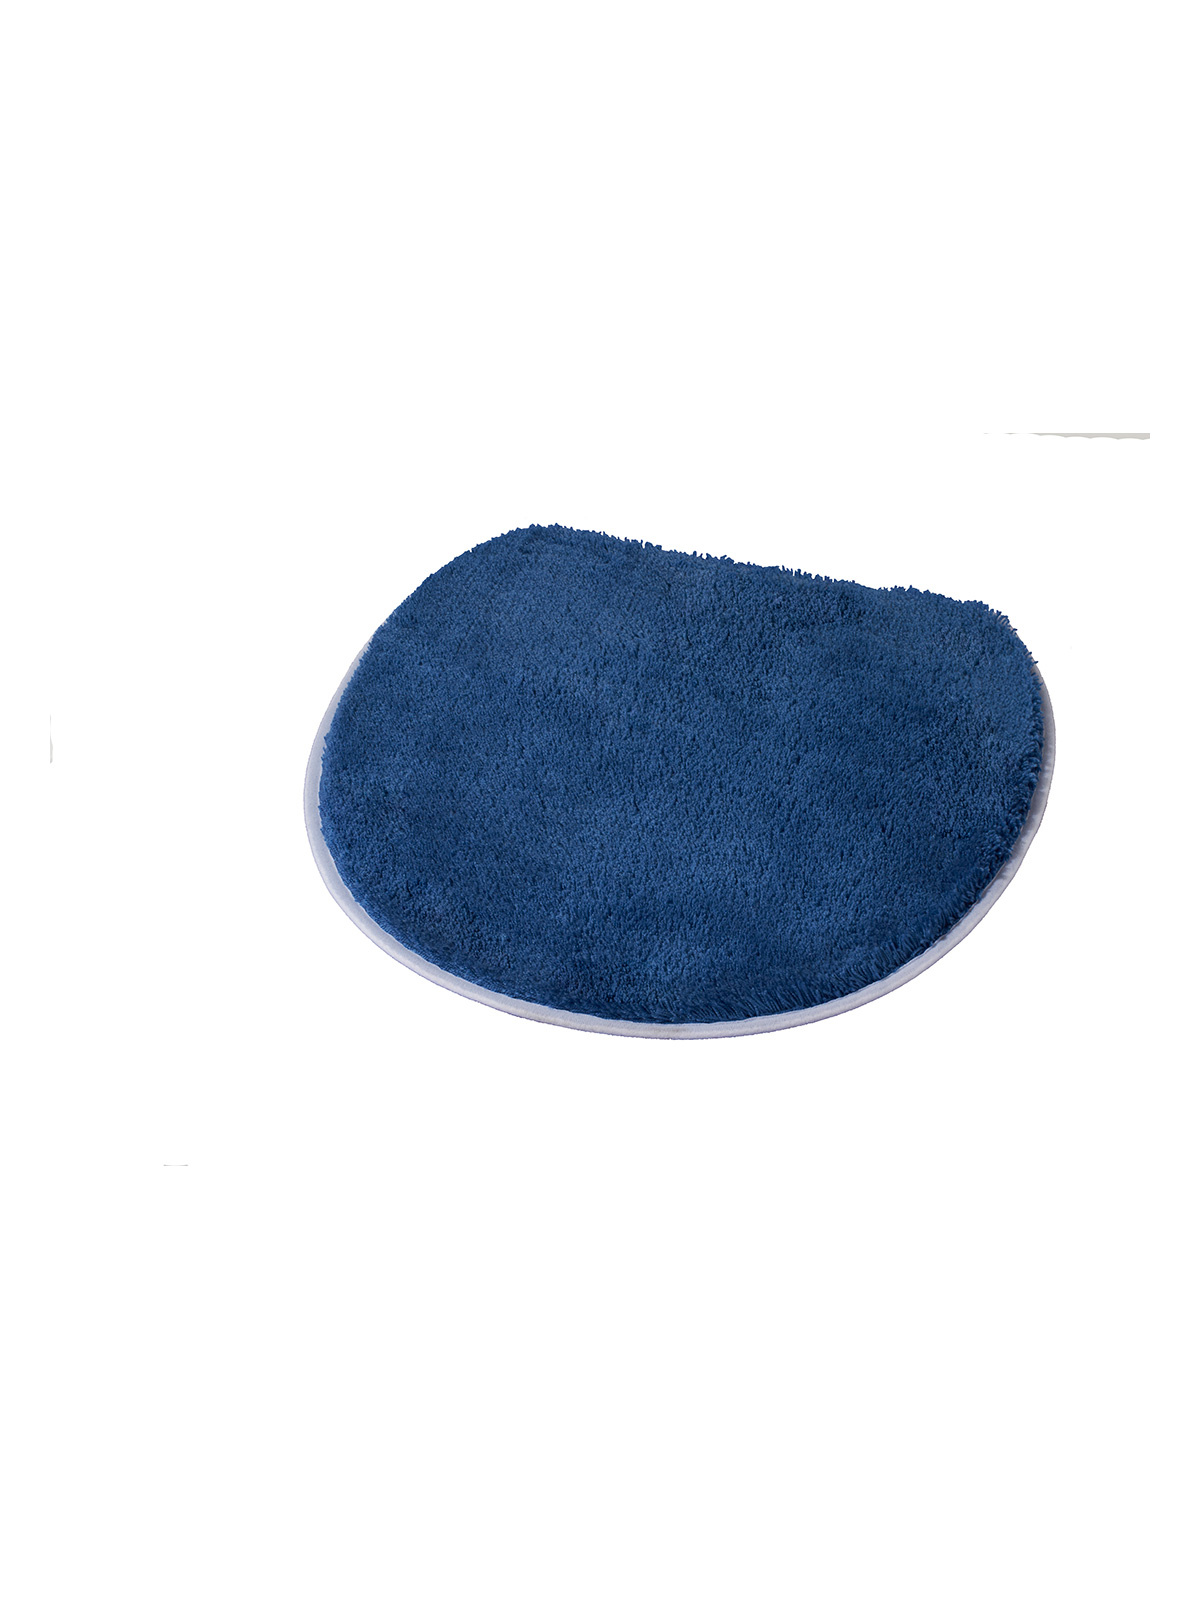 Toiletcover Soft Marineblauw 47x50cm Hsdwnl